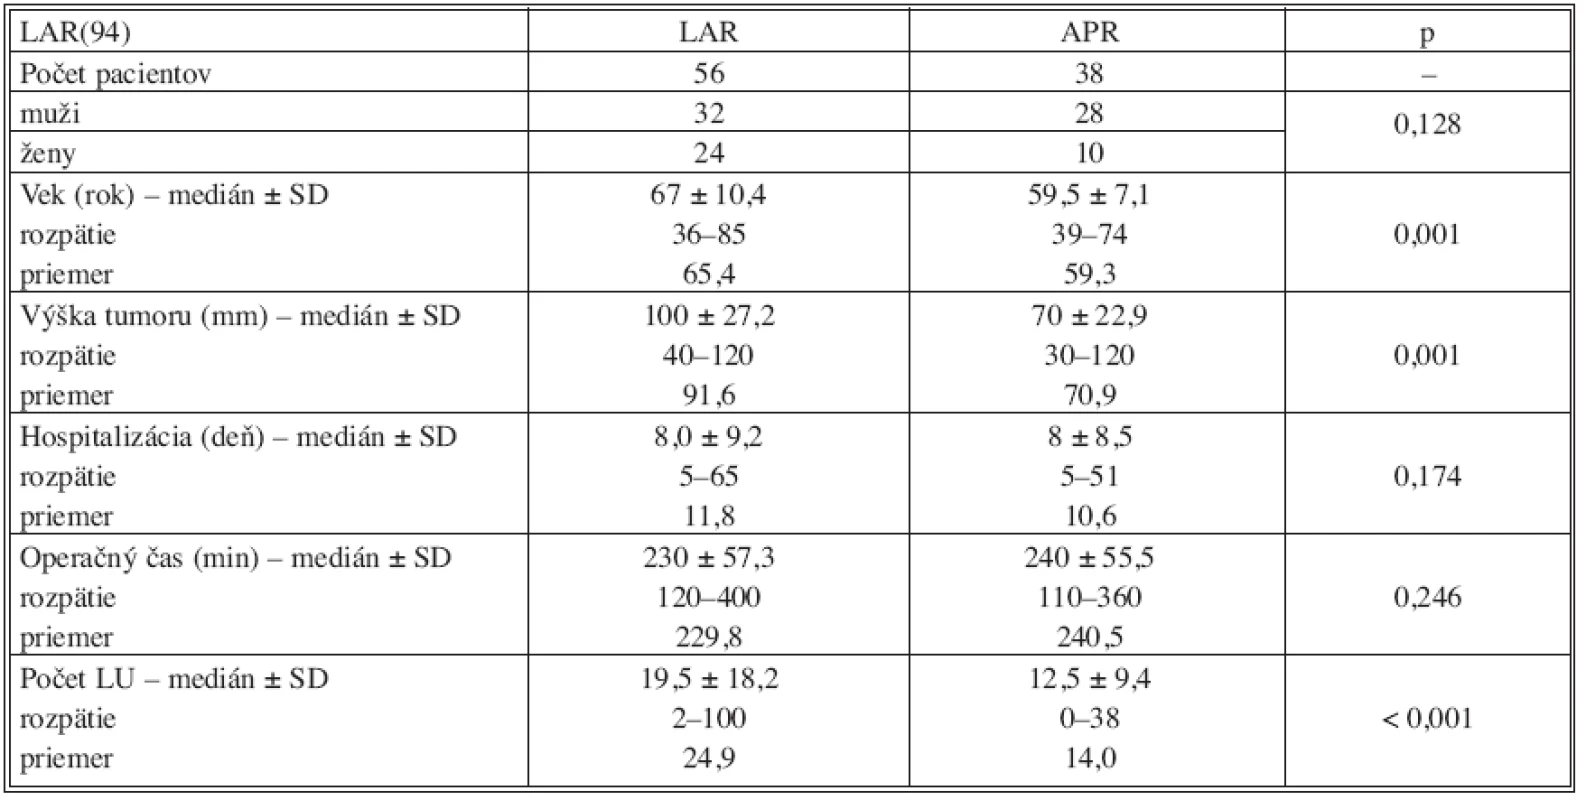 Porovnanie sledovaných parametrov v podskupine sfinkter šetriacich resekcií (LAR)
Tab. 6. Assessment of the studied parameters in the sphincter-saving resections subgroup (LAR)